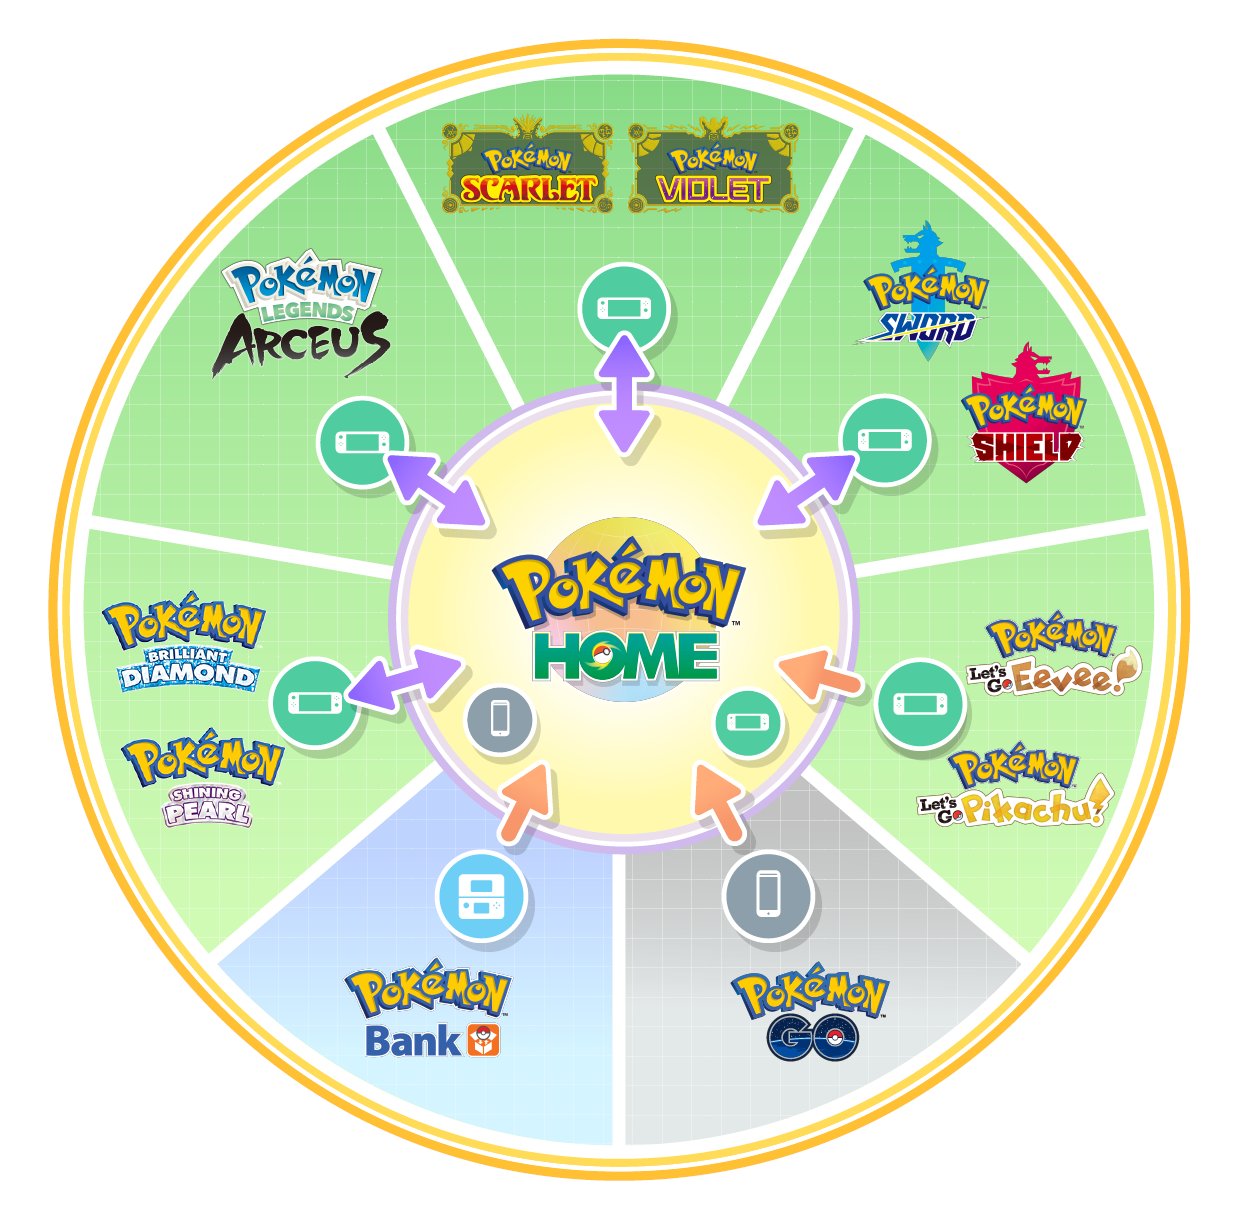 Pokémon Brilliant Diamond and Shining Pearl Differences: Version Exclusive  Pokémon and Items